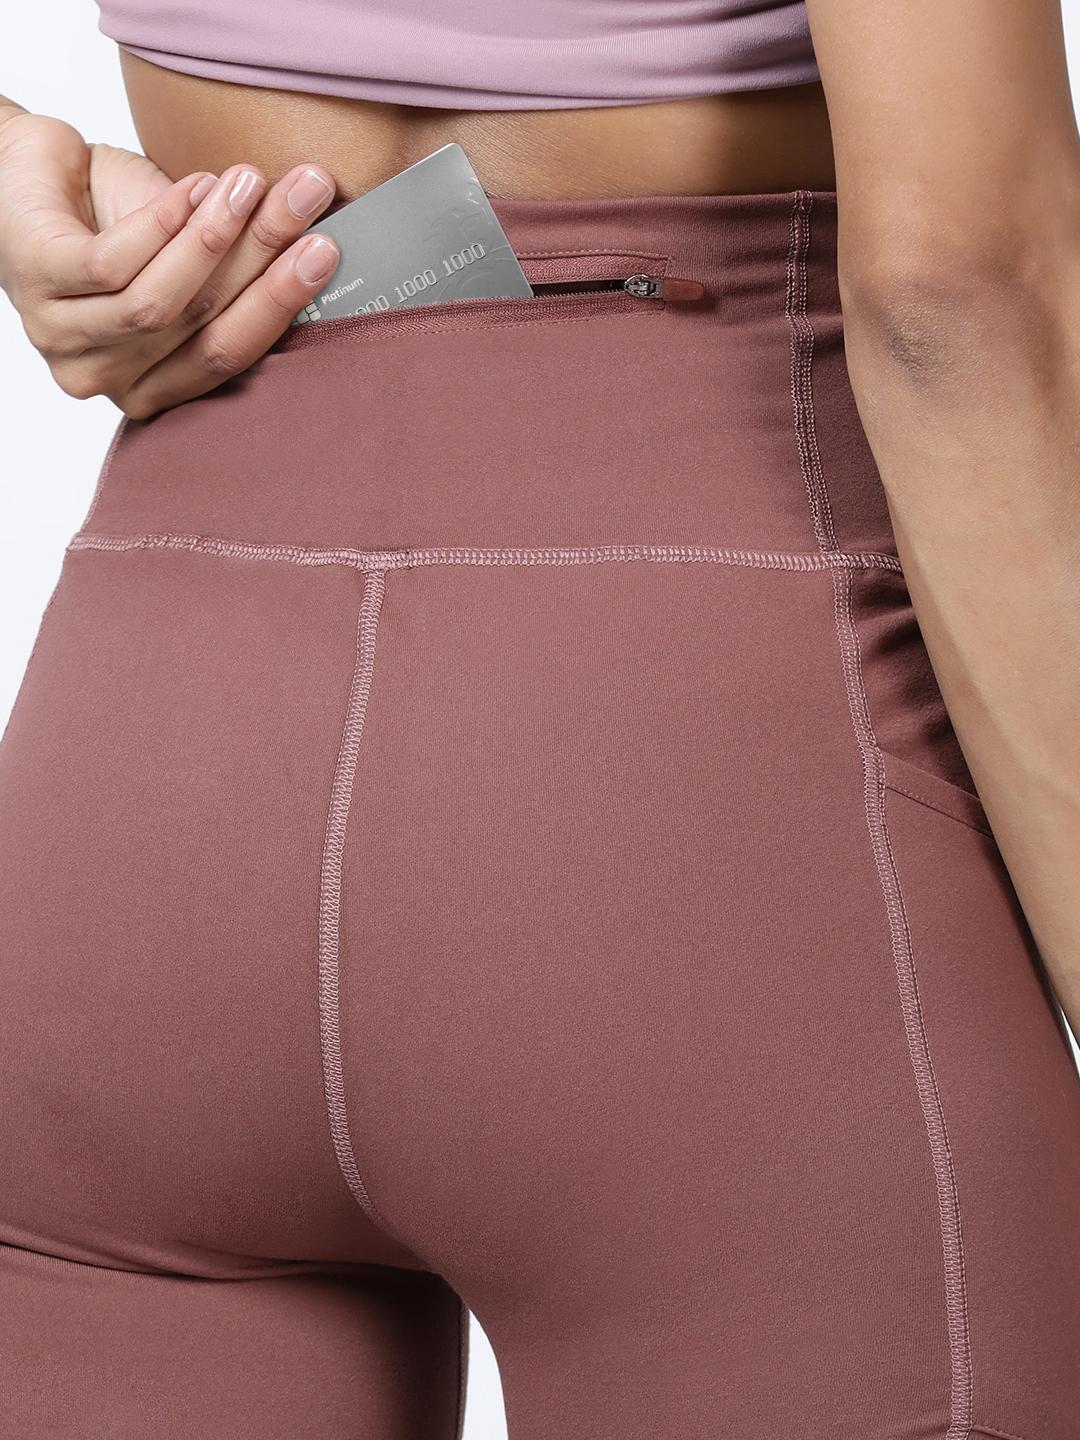 Stash Me In Back Zipper leggings for women – Mauve – MICHELLE SALINS